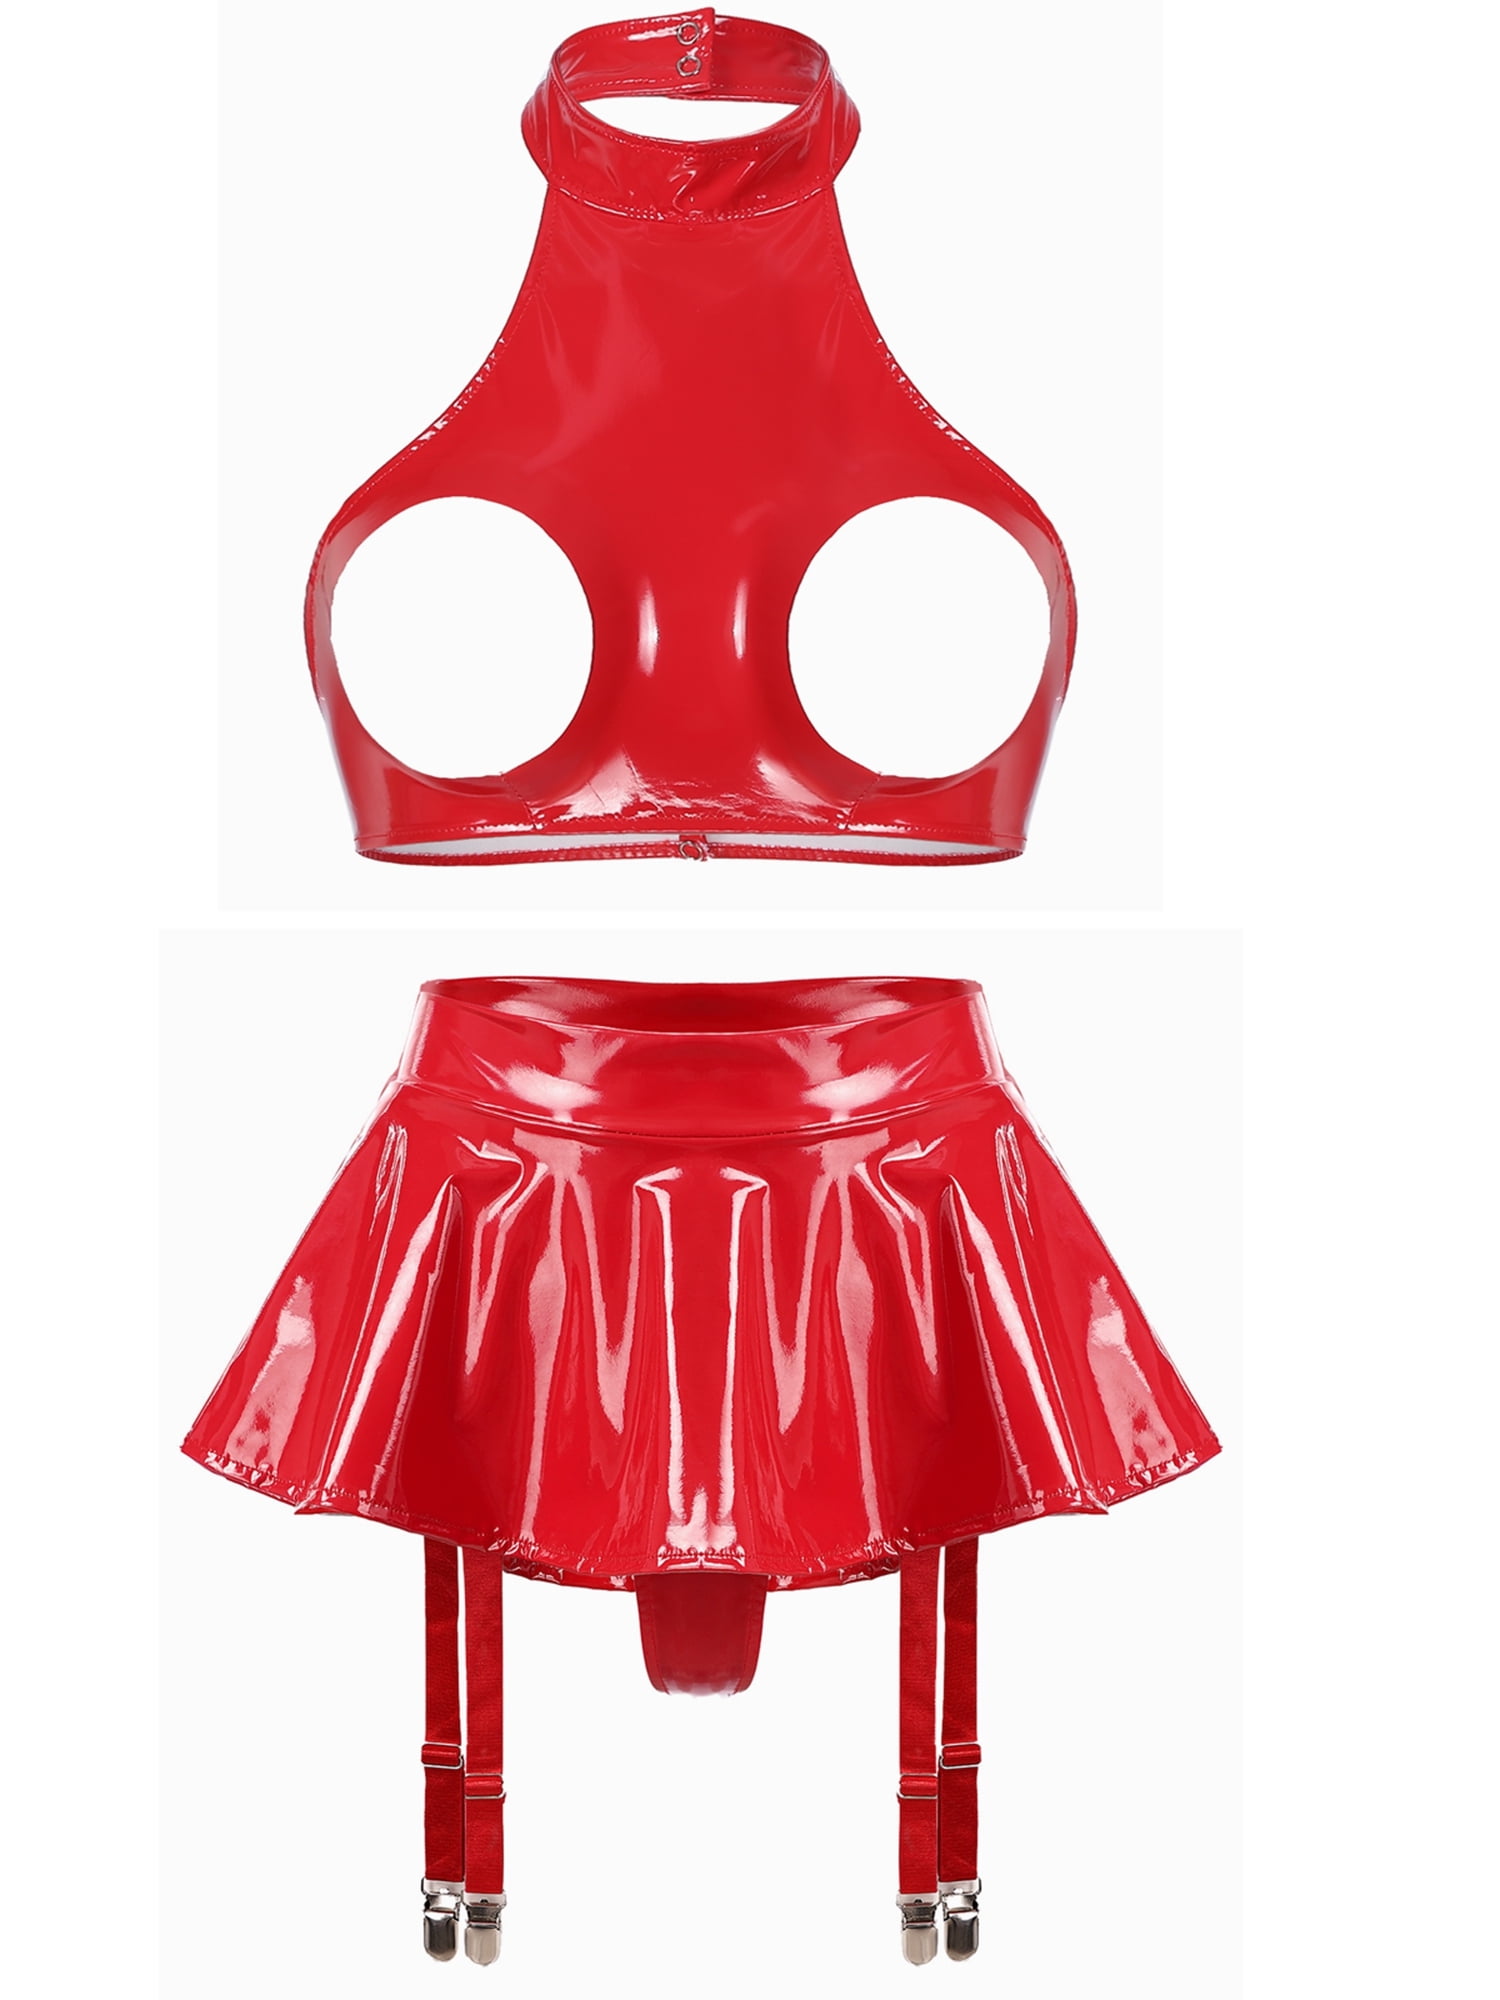 CHICTRY Womens Latex Lingerie Set Wire-Free Open Cups Bra with Garter Mini  Skirt Anniversary Honeymoon Gift C Red M 